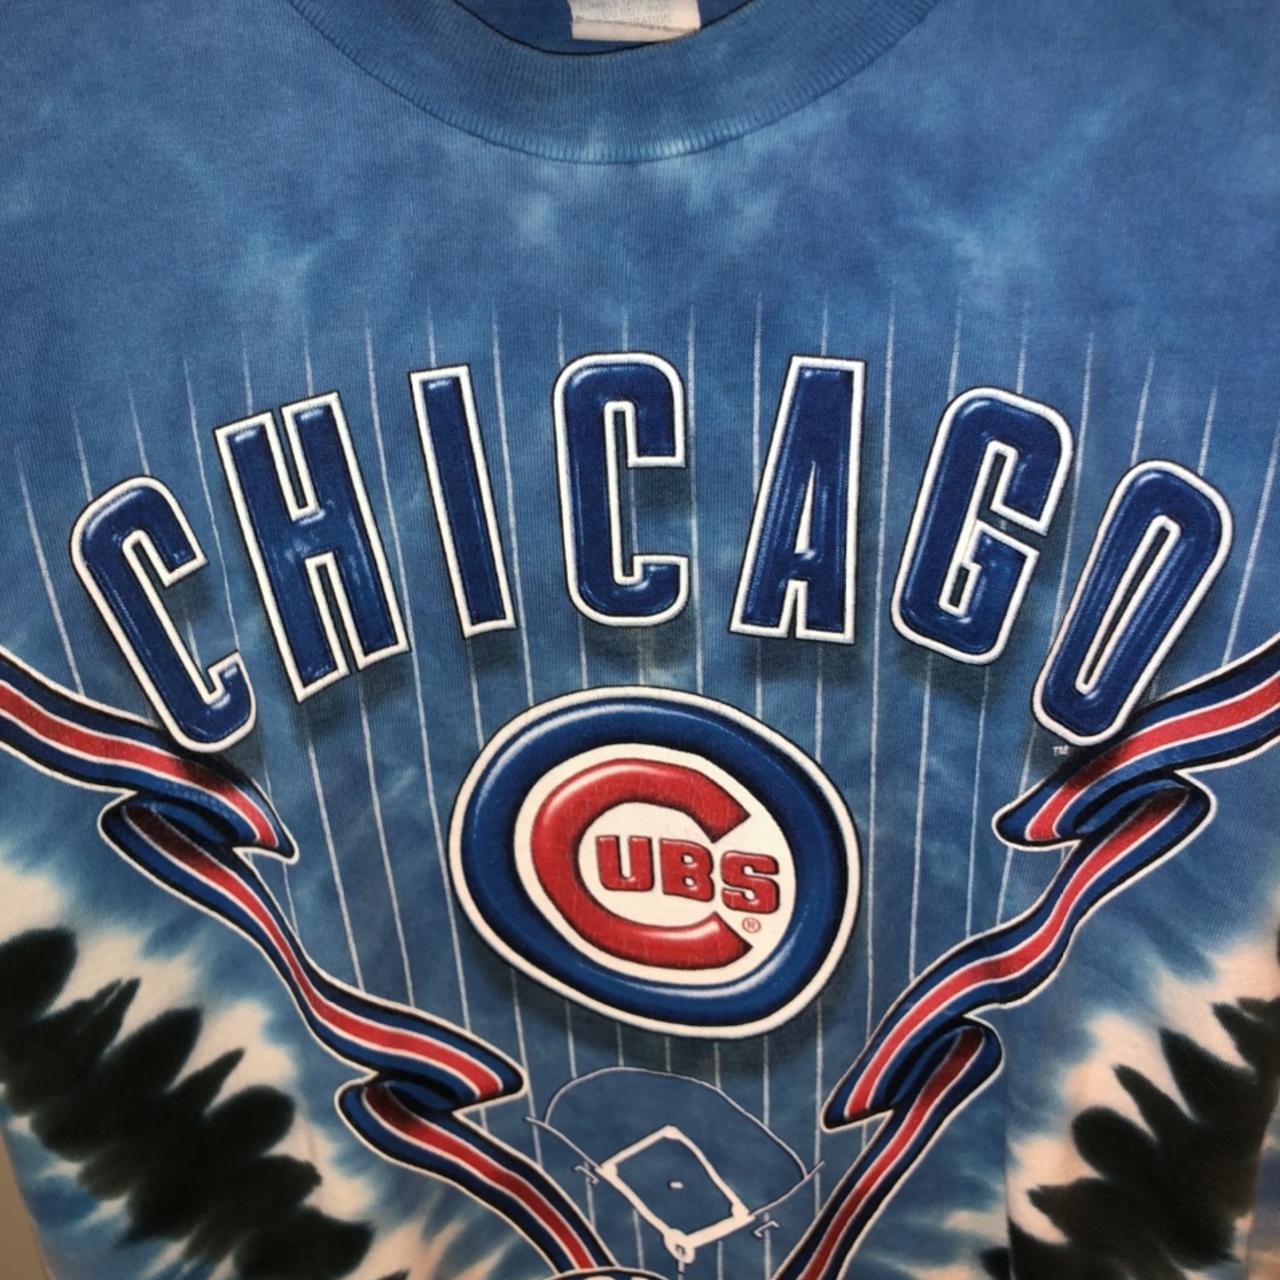 VTG Cubs Tie-Dye Shirt🐻🍄 Printed on 'Lee' Shirt - Depop